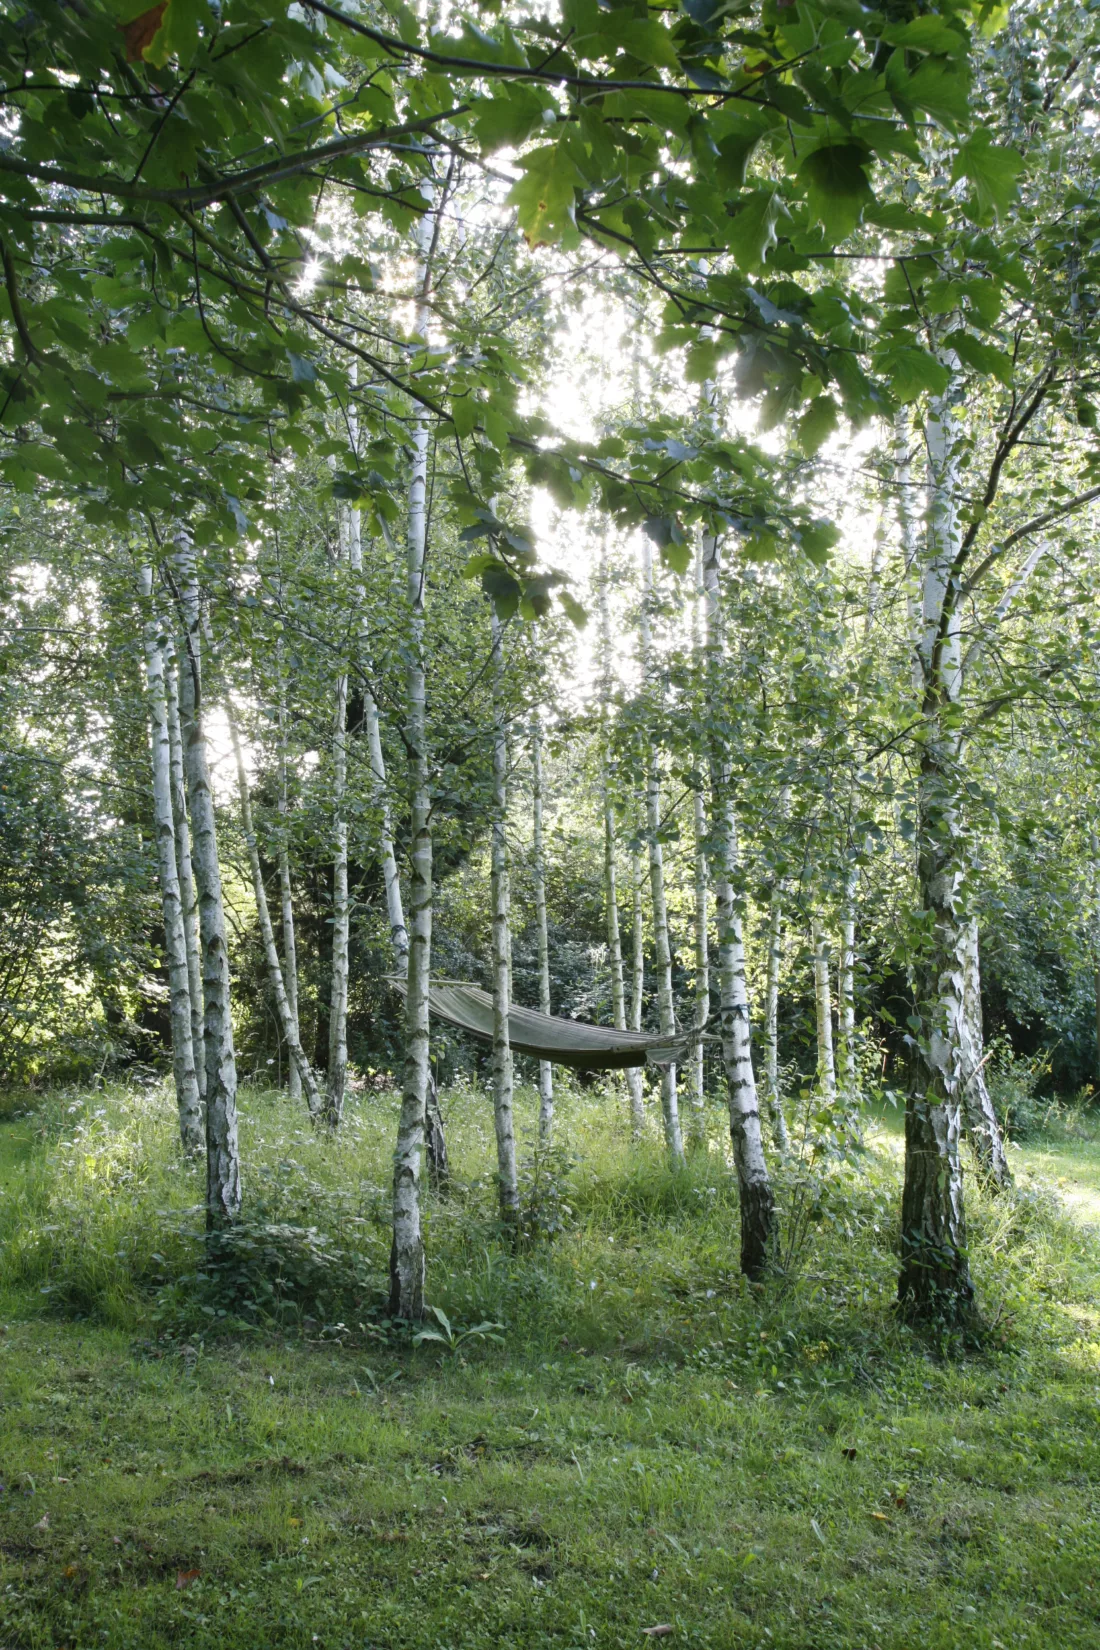 grove of birch trees with hammock